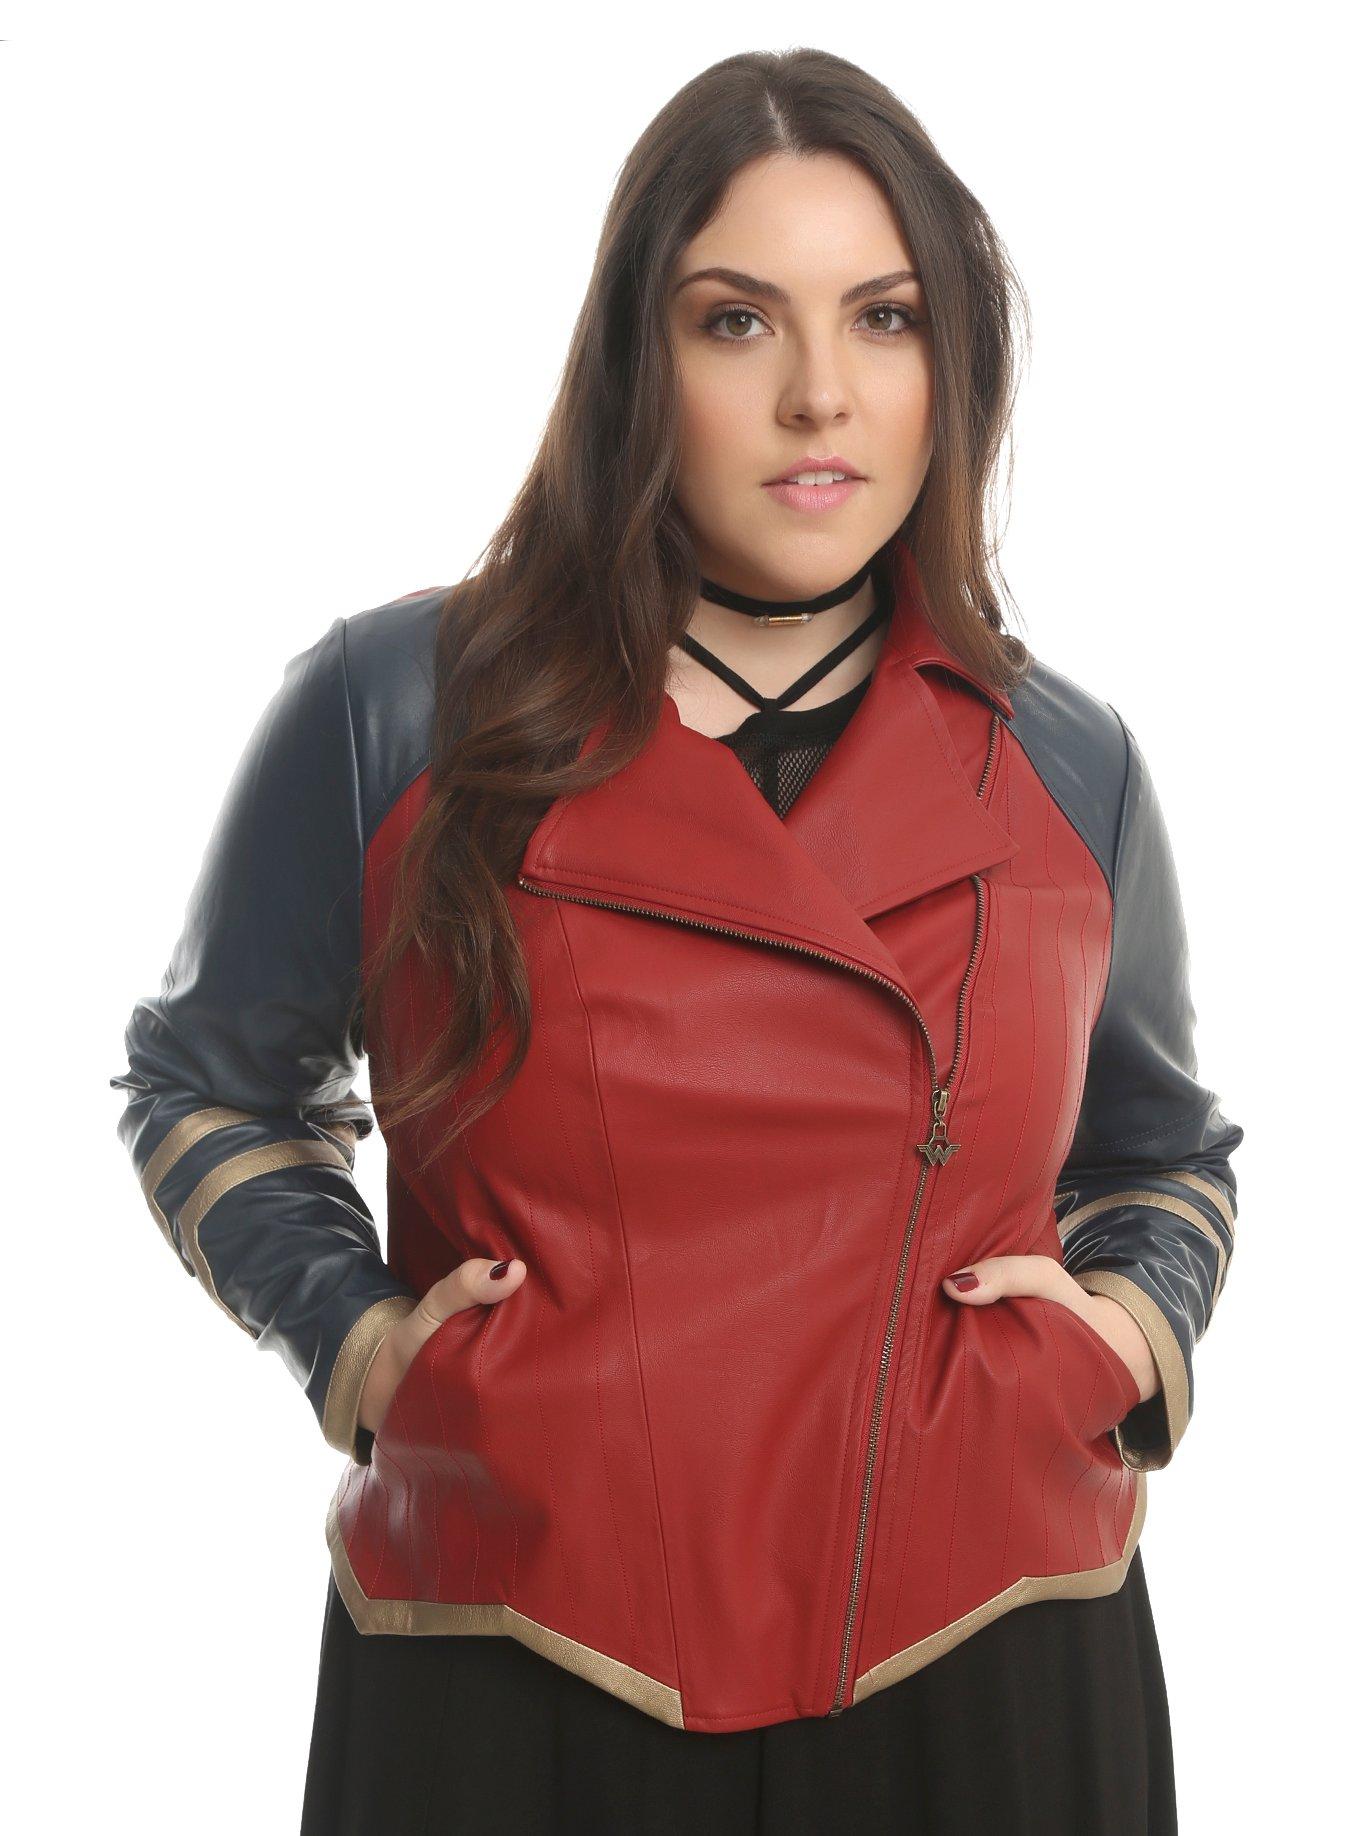 Her Universe Dc Comics Wonder Woman Armor Faux Leather Jacket Plus Size Hot Topic